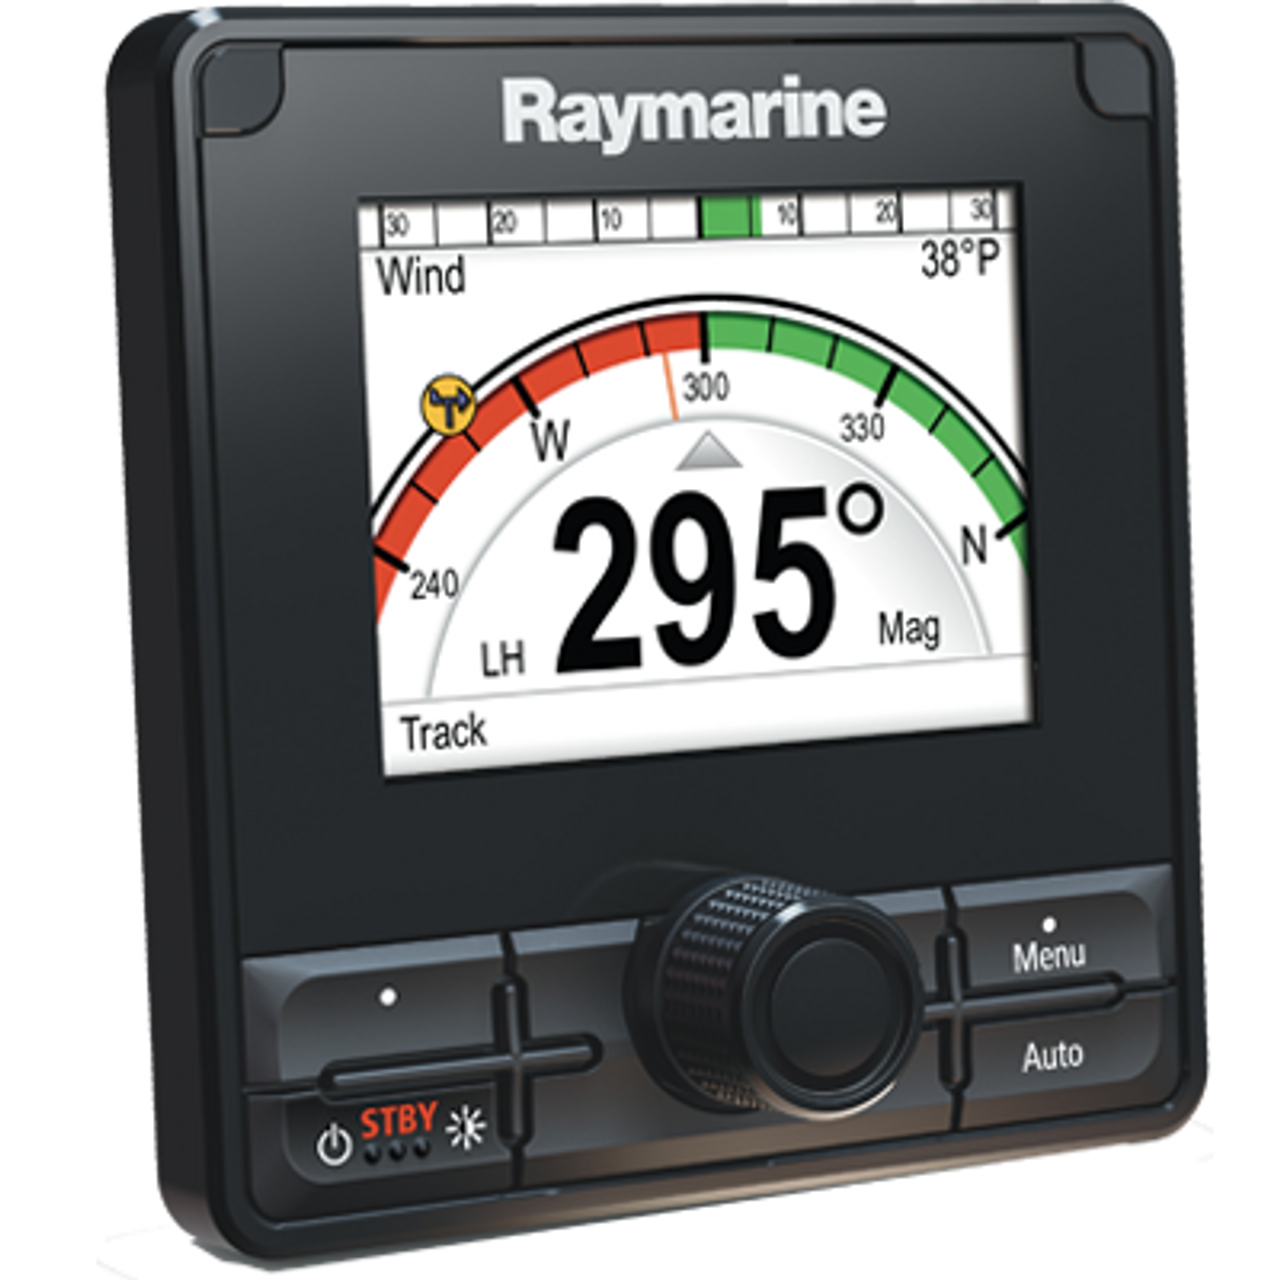 Raymarine E70329